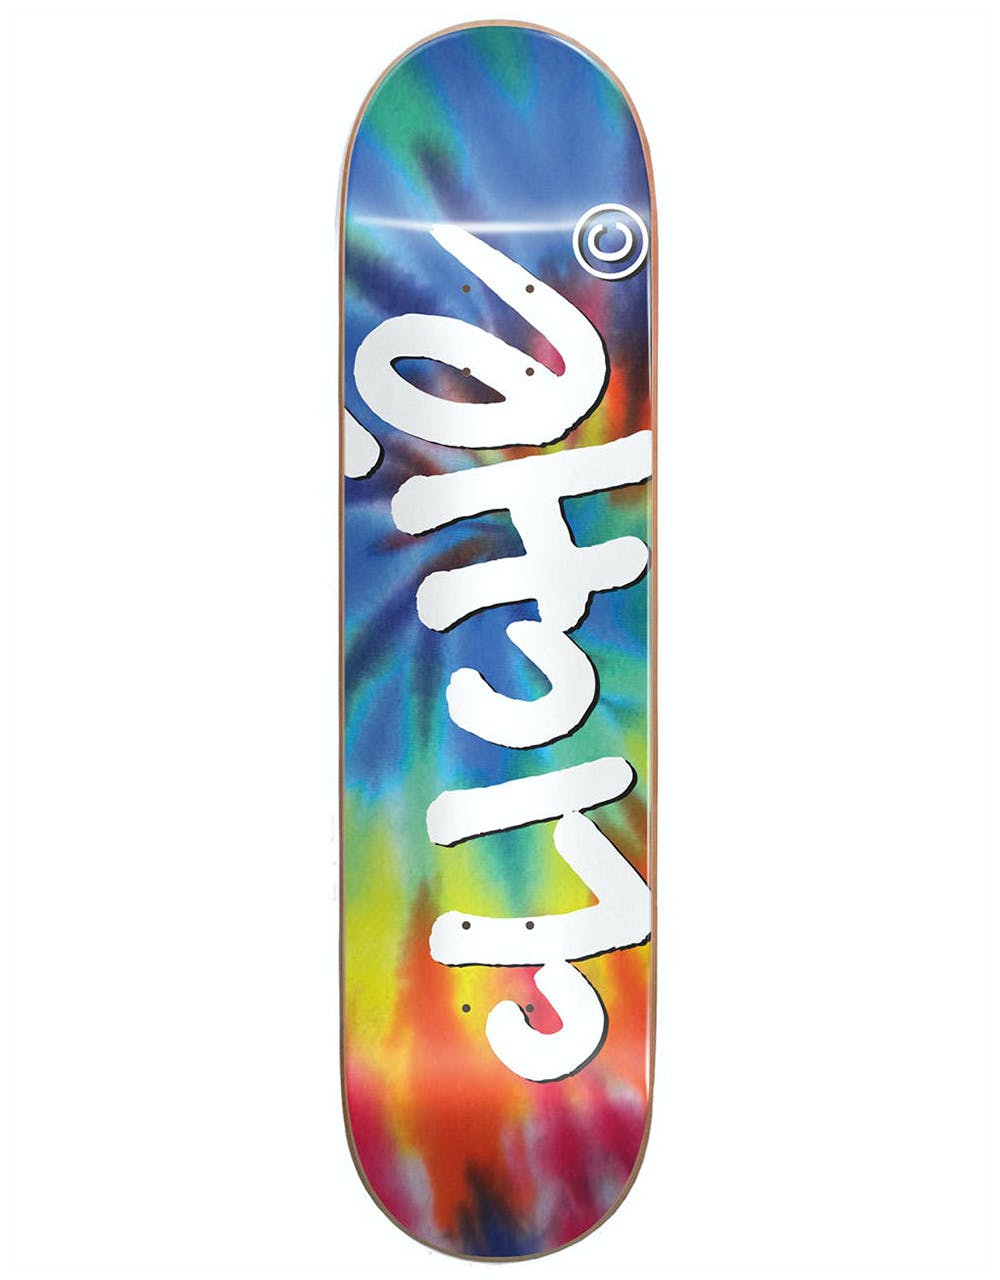 Cliché Handwritten Tie Dye RHM Skateboard Deck - 8.125"